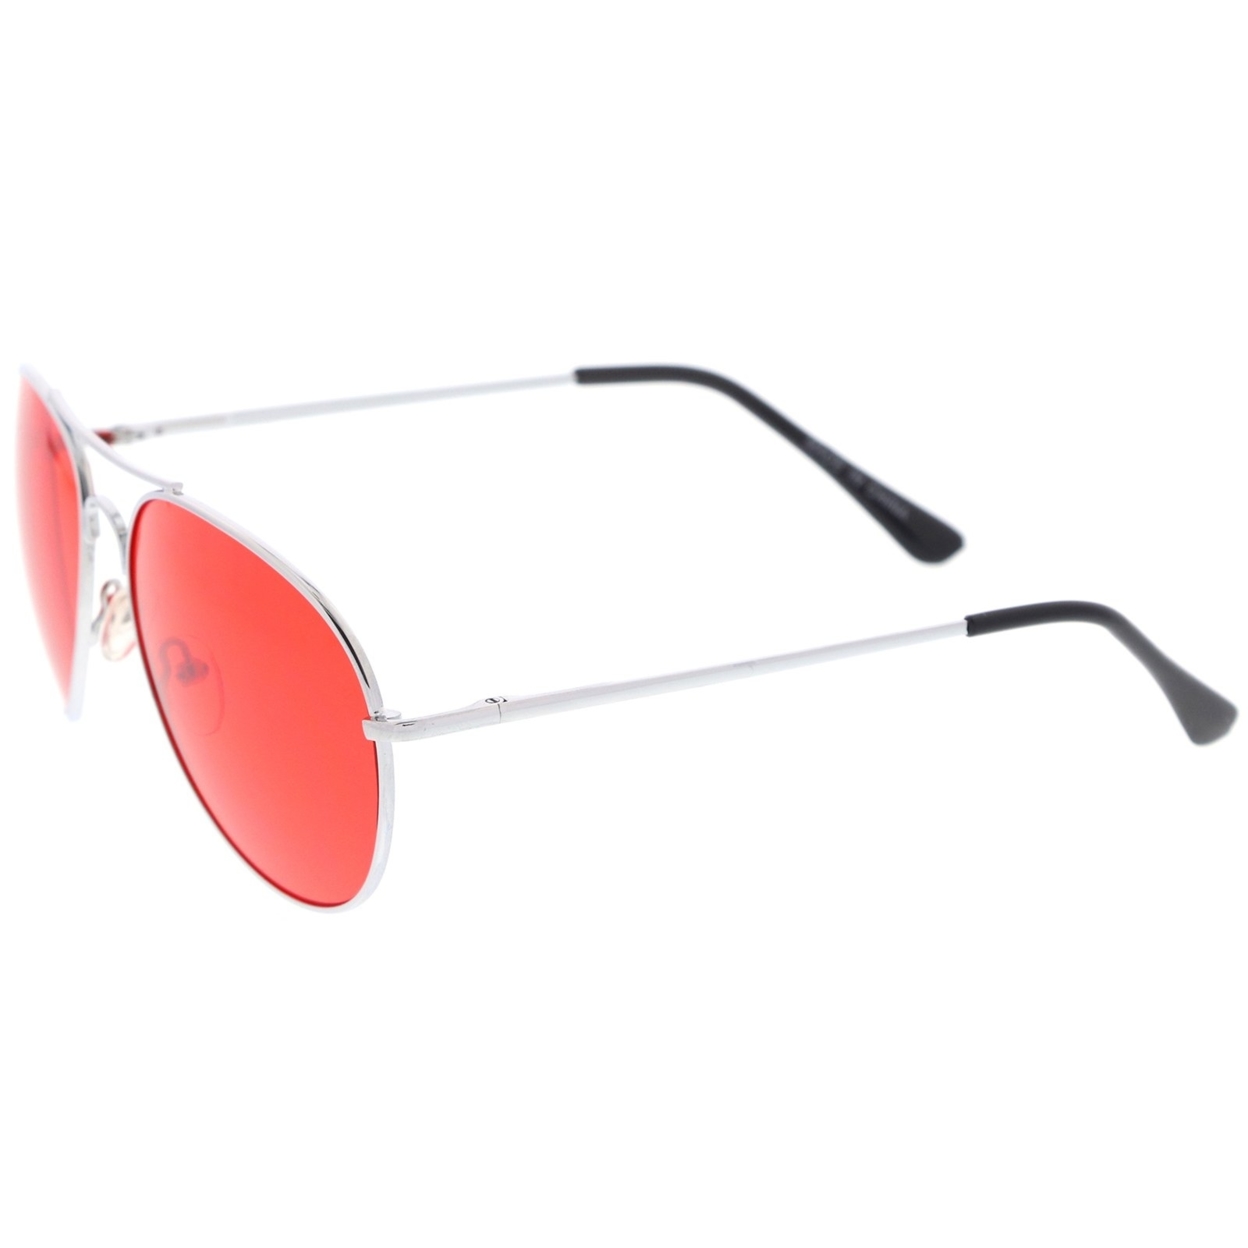 Classic Metal Frame Colored Teardrop Lens Aviator Sunglasses 57mm - 3-Pack Deluxe , Red + Purple + Dark Blue